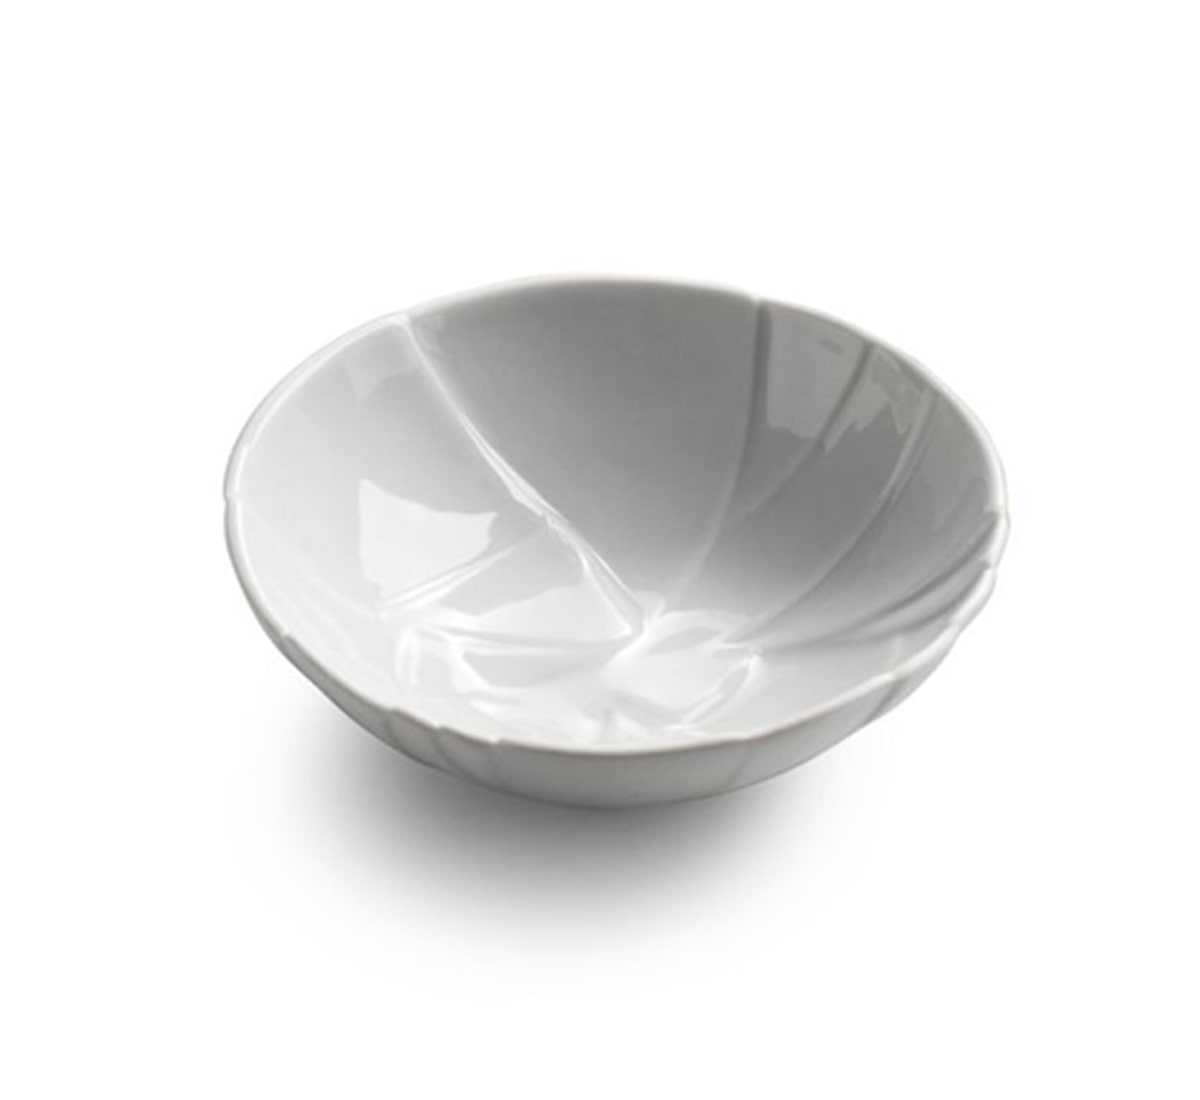 PORDAMSATrencadis bowl  포르담사 트렌카디스 볼 (Ø11)MADE IN SPAIN